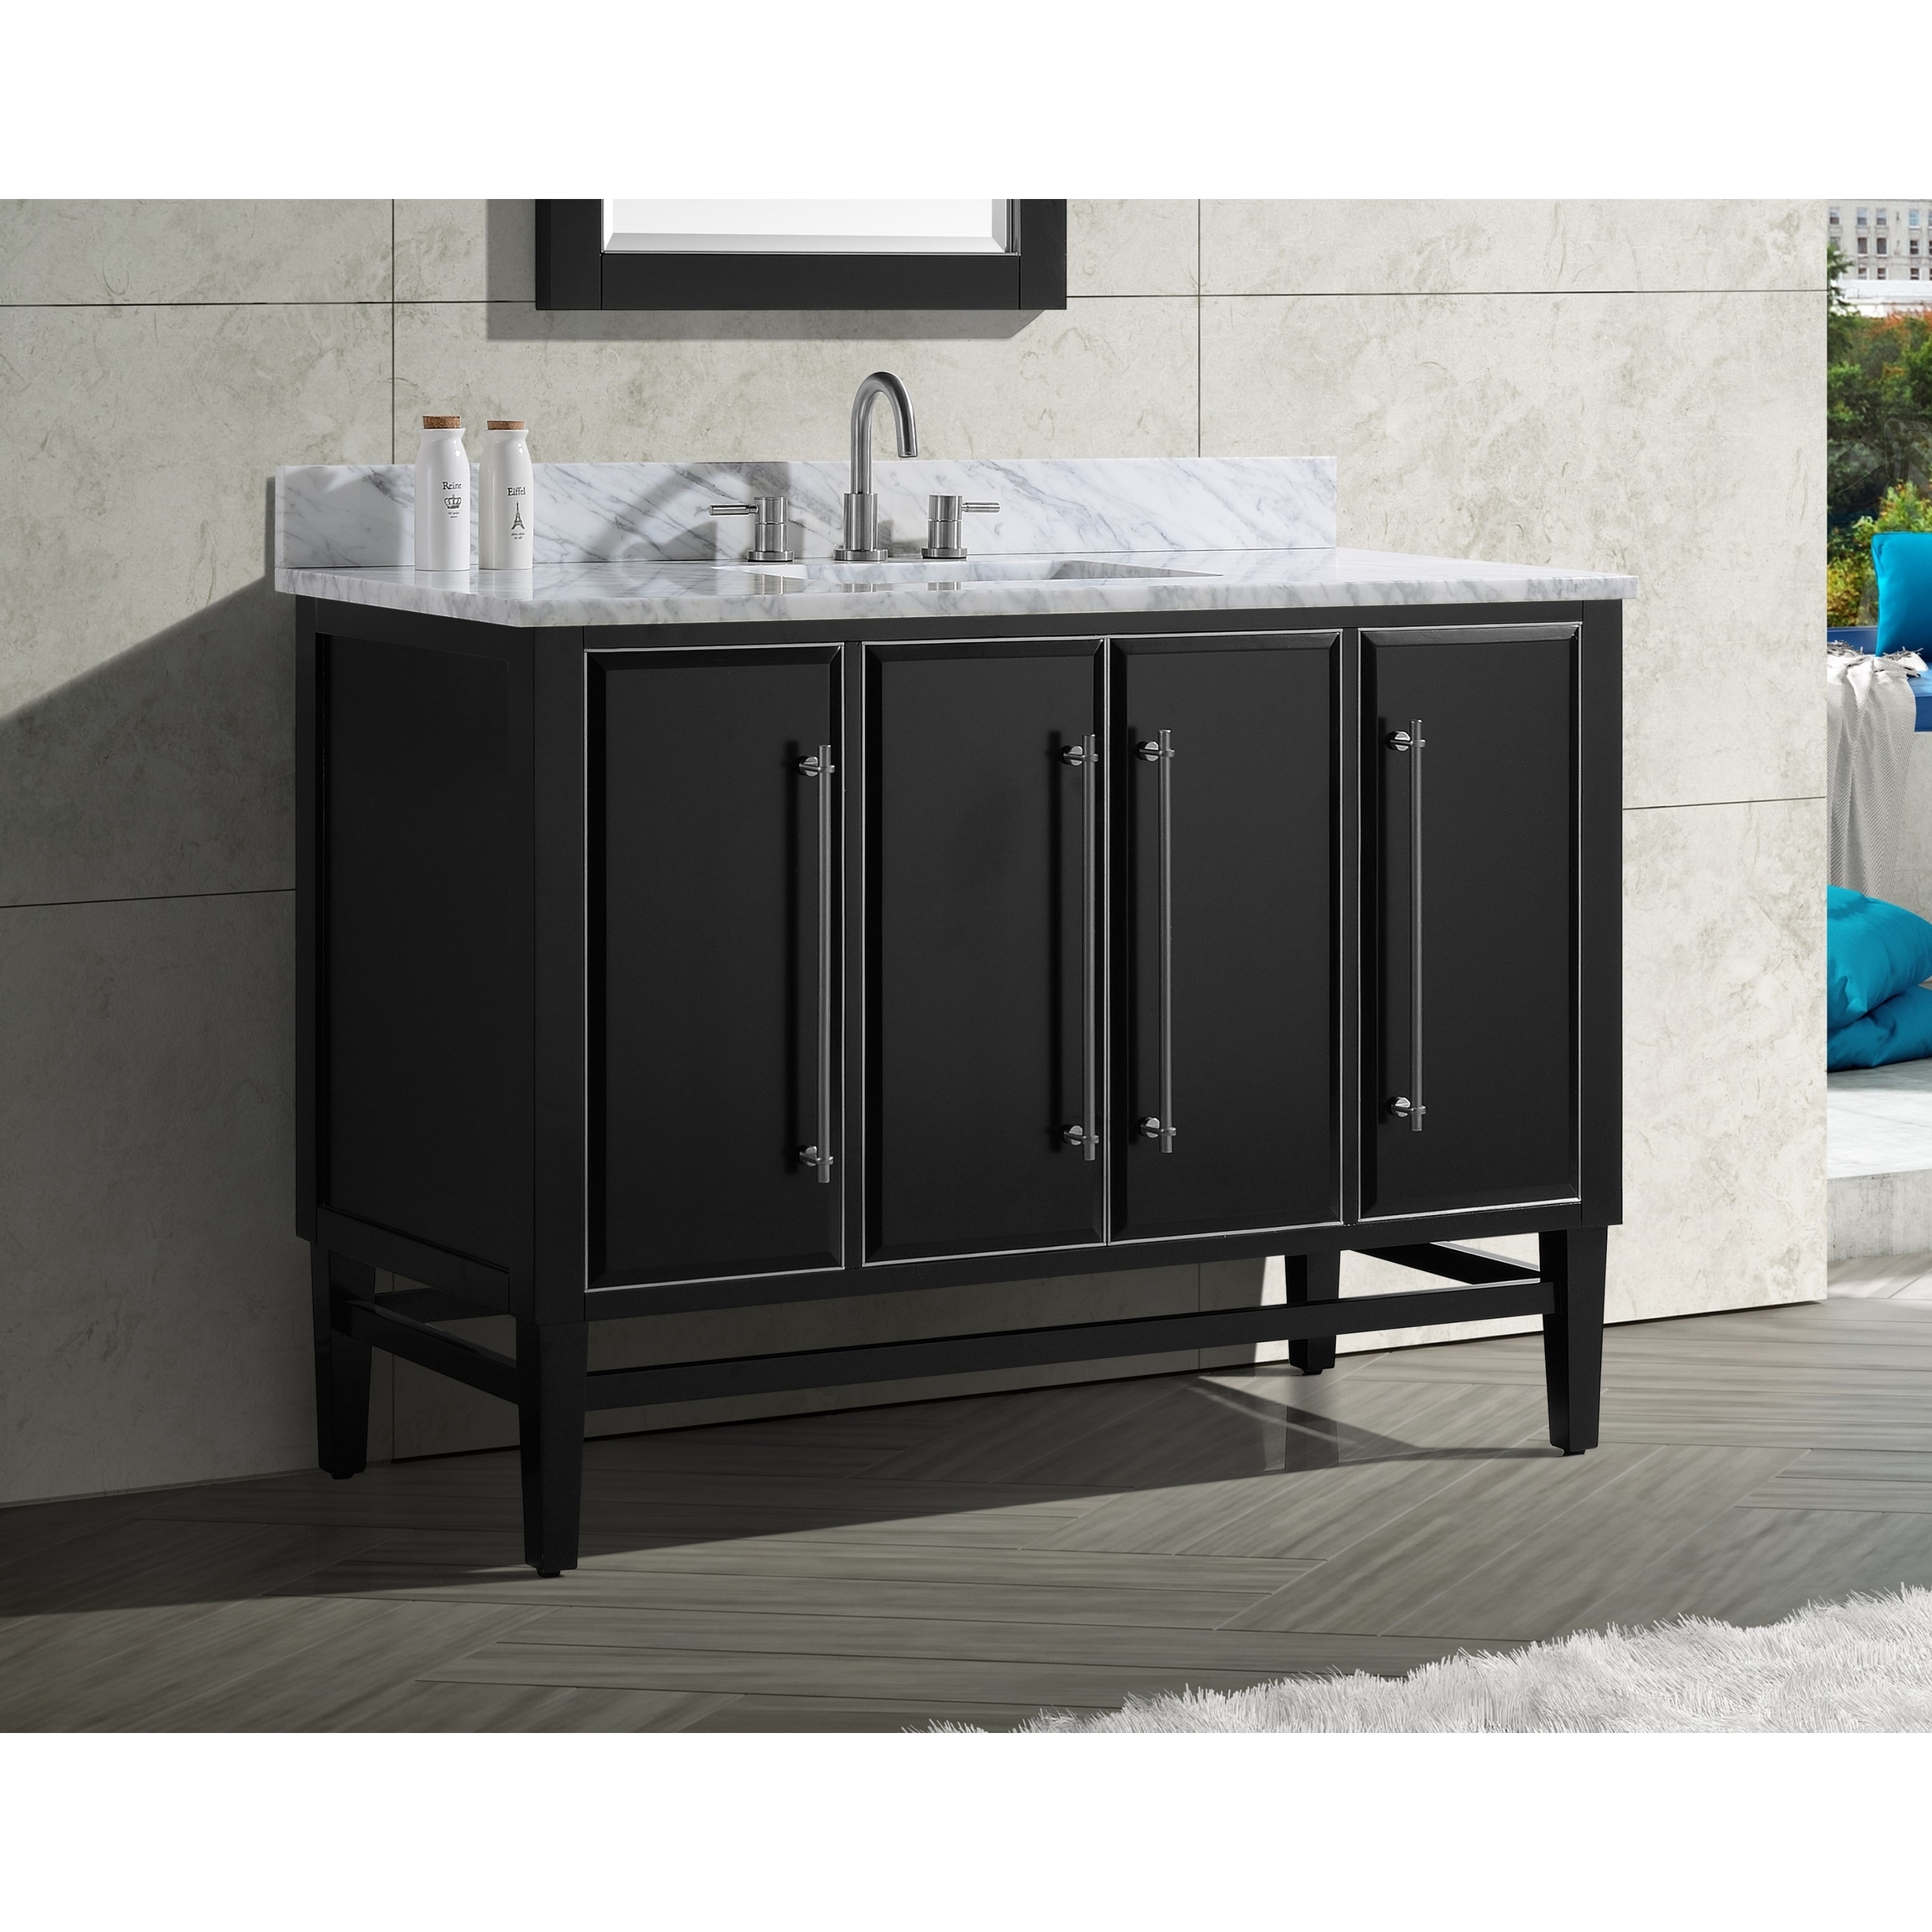 Avanity Mason 49 In Single Sink Bathroom Vanity Set In Black With Silver Trim Overstock 28670922